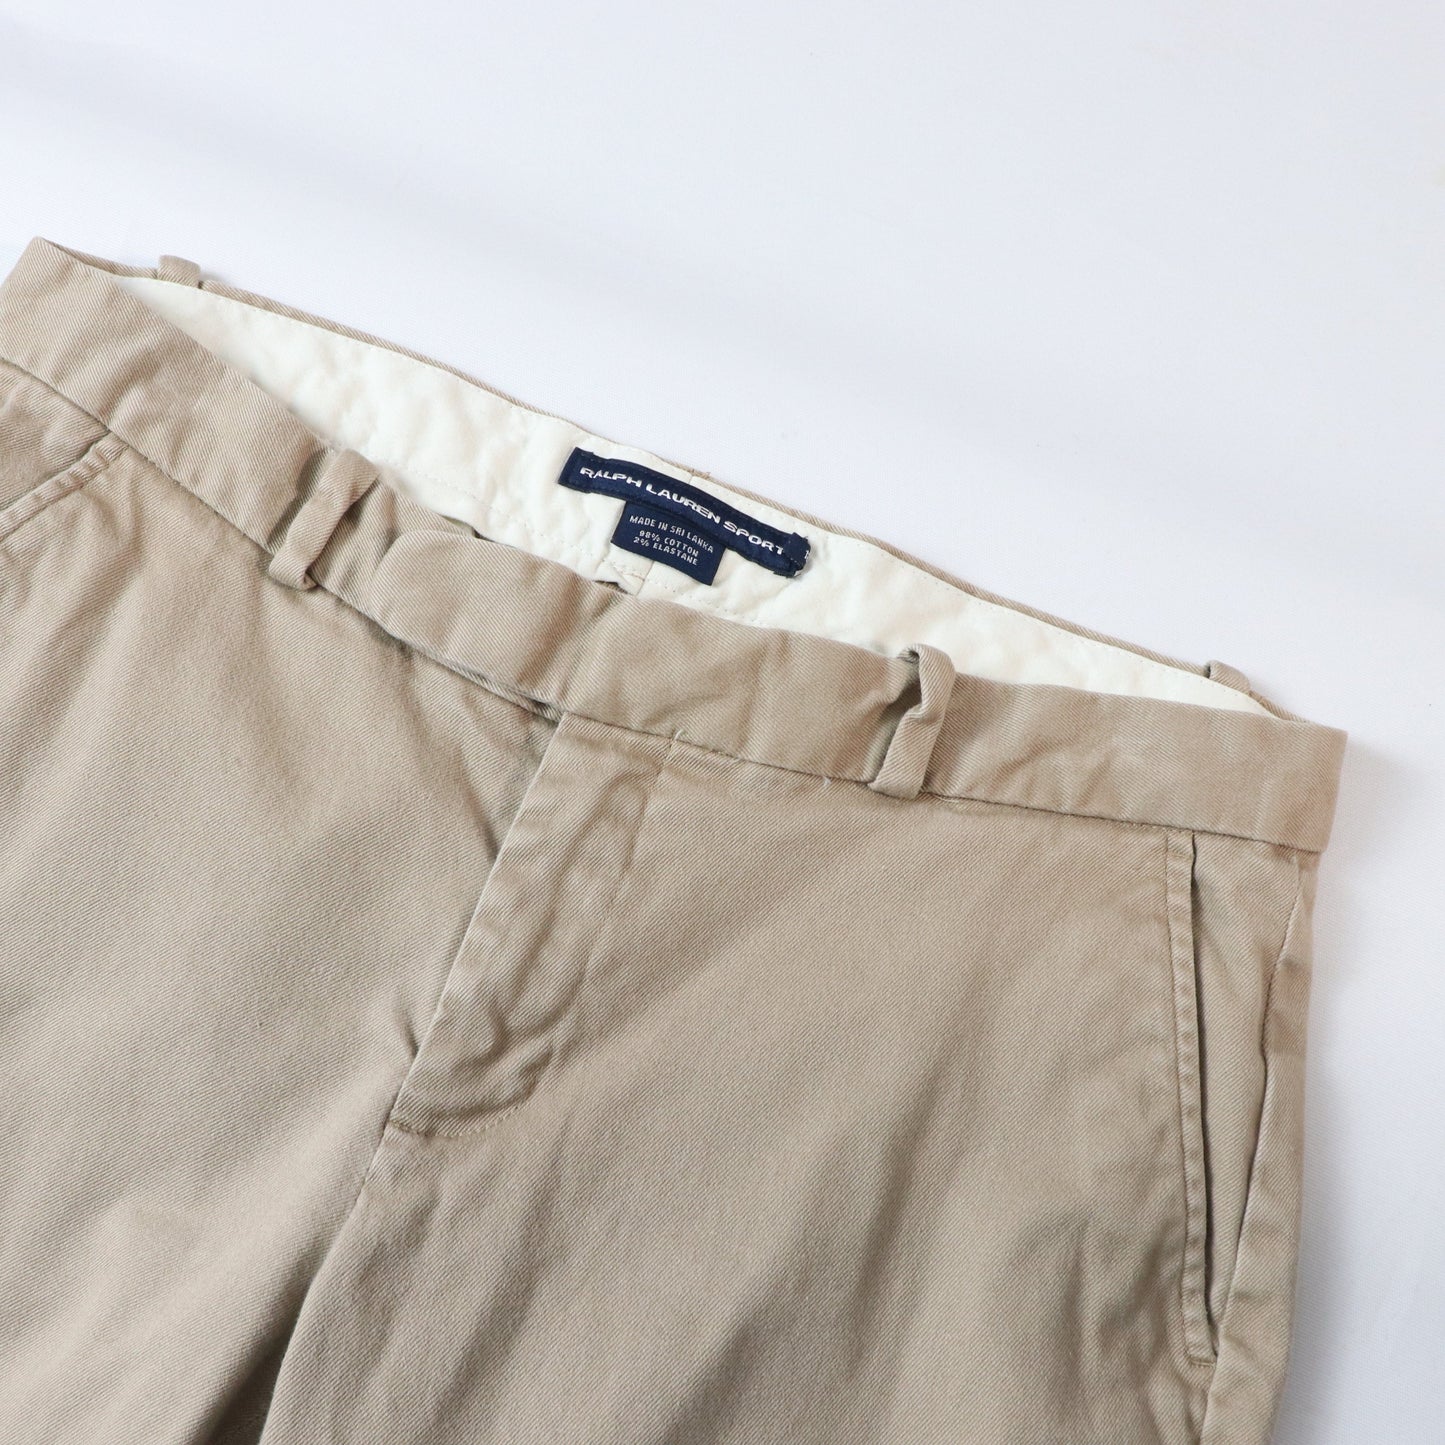 Chaps Ralph Lauren Pants Vintage Ralph Lauren Sport Pants Women's Size 10